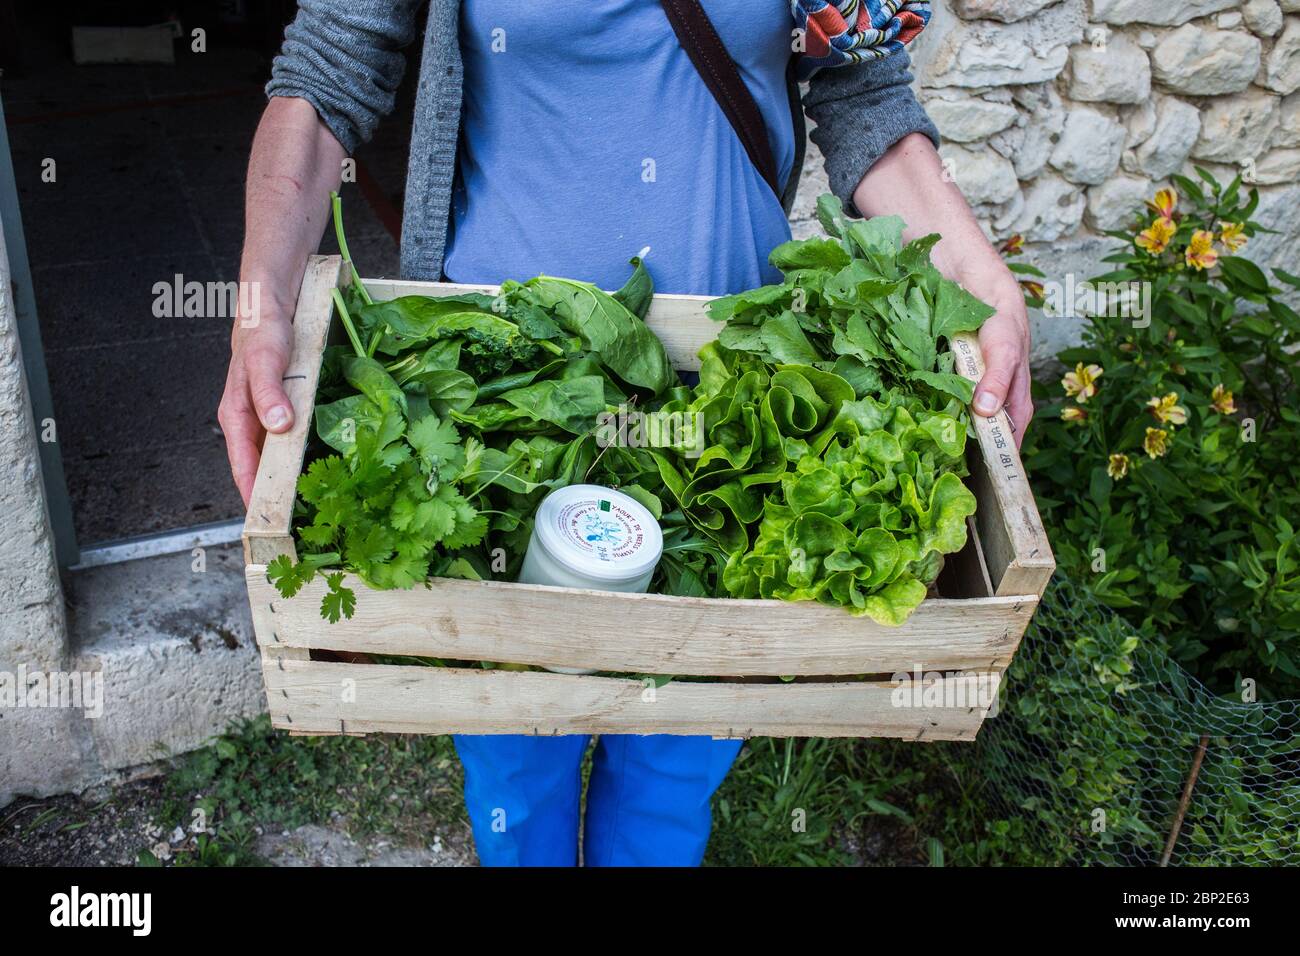 Sale of organic food on the farm, Dordogne, France. Stock Photo